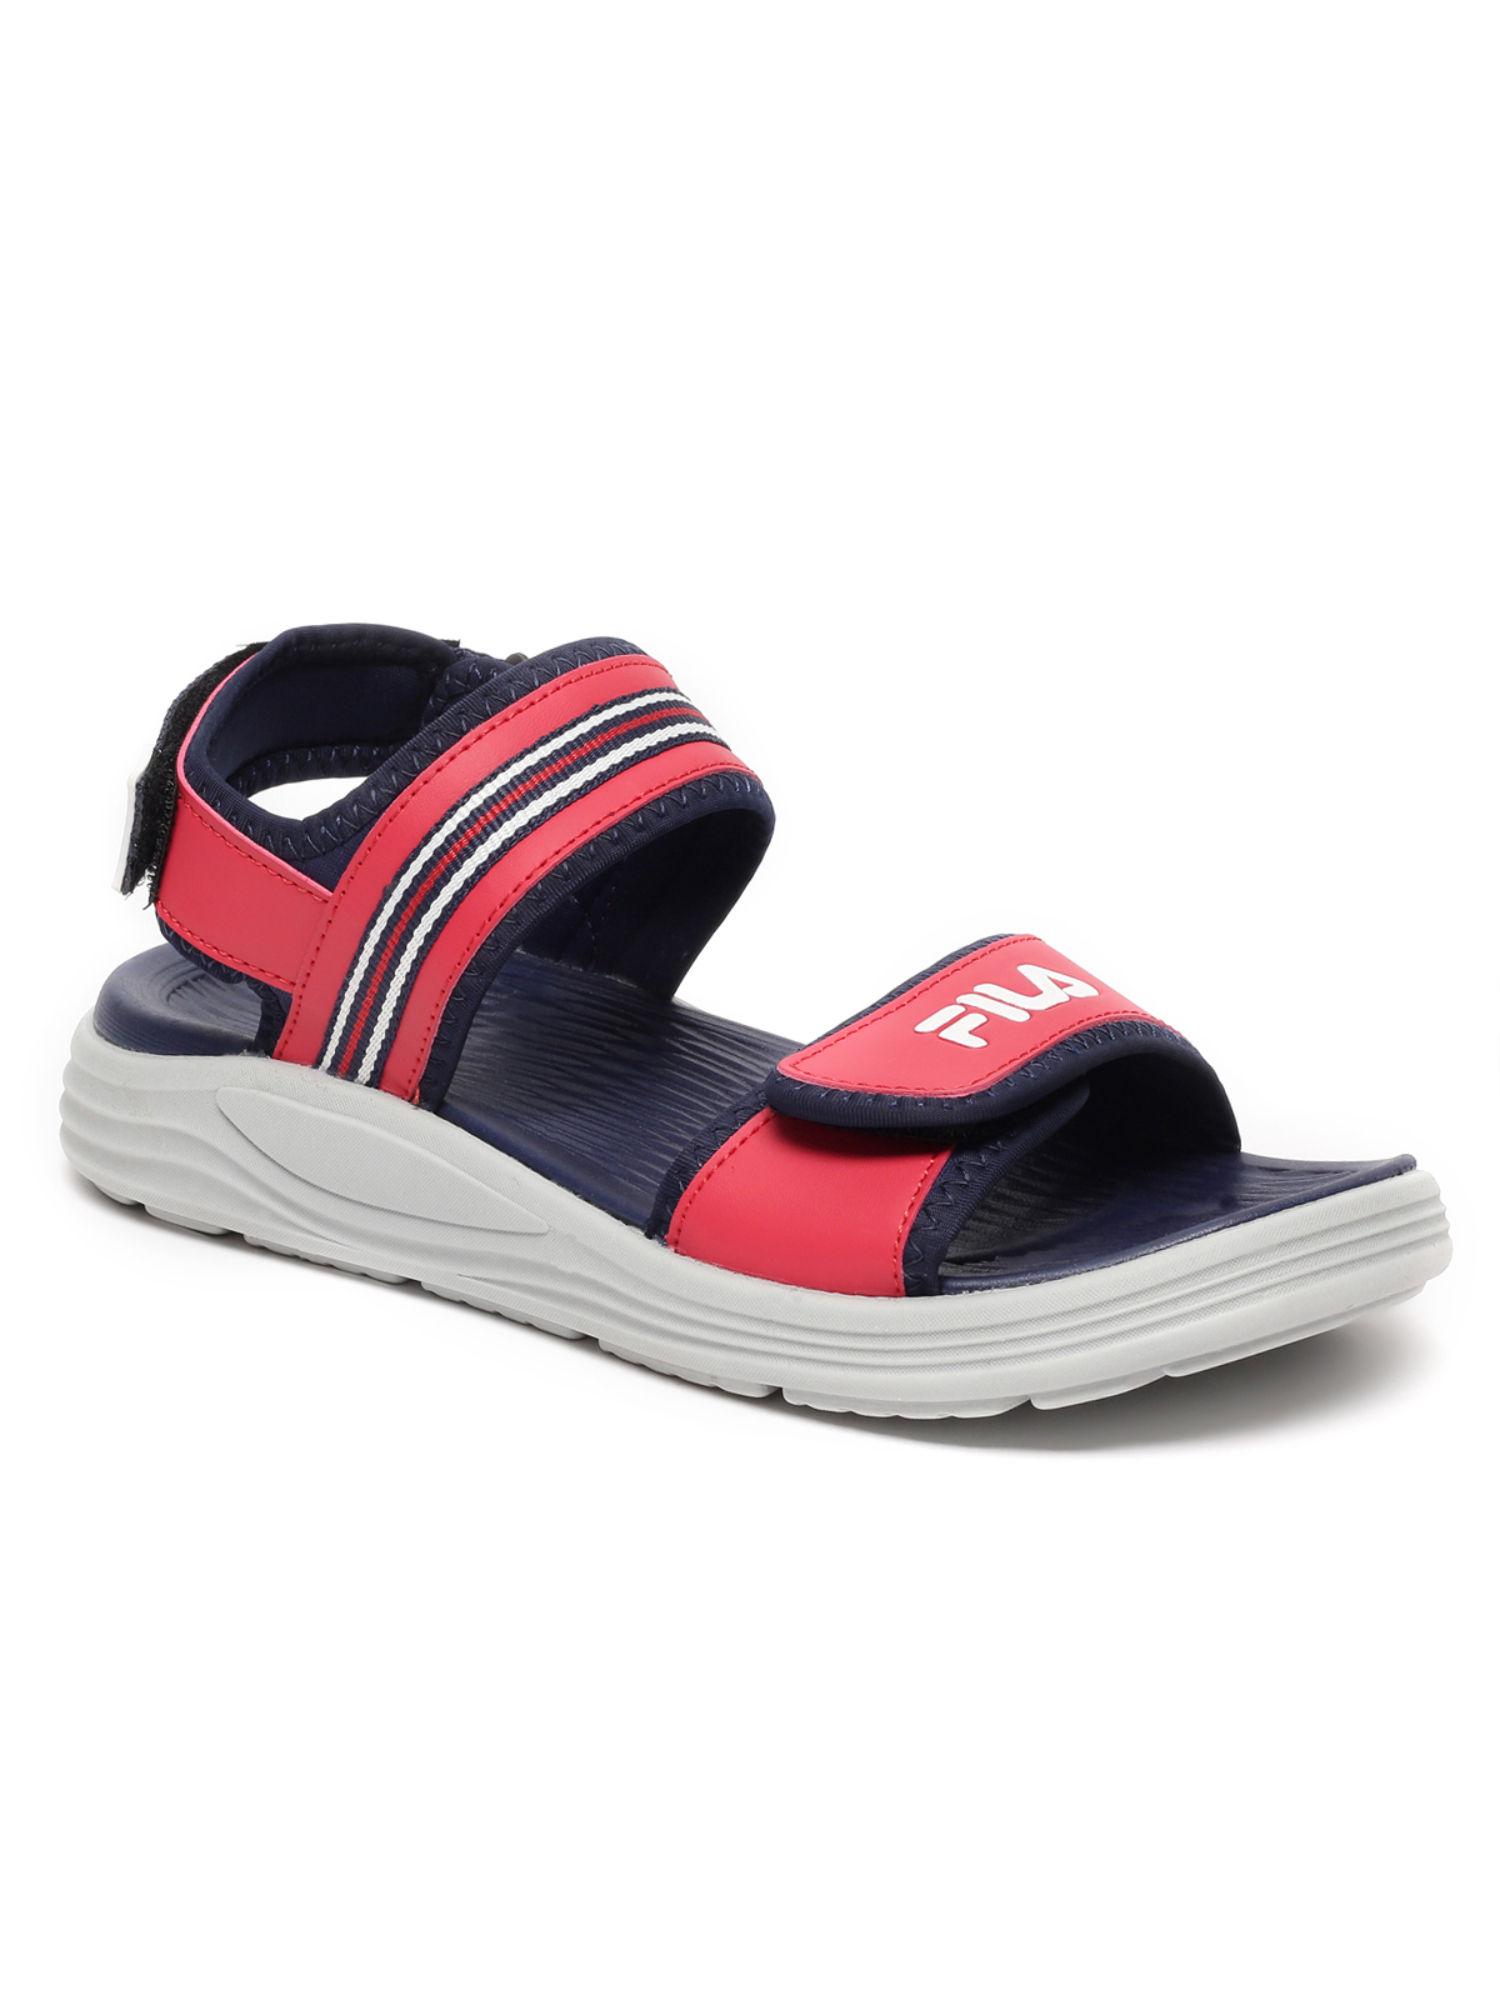 keystay comfort footwear red sandals